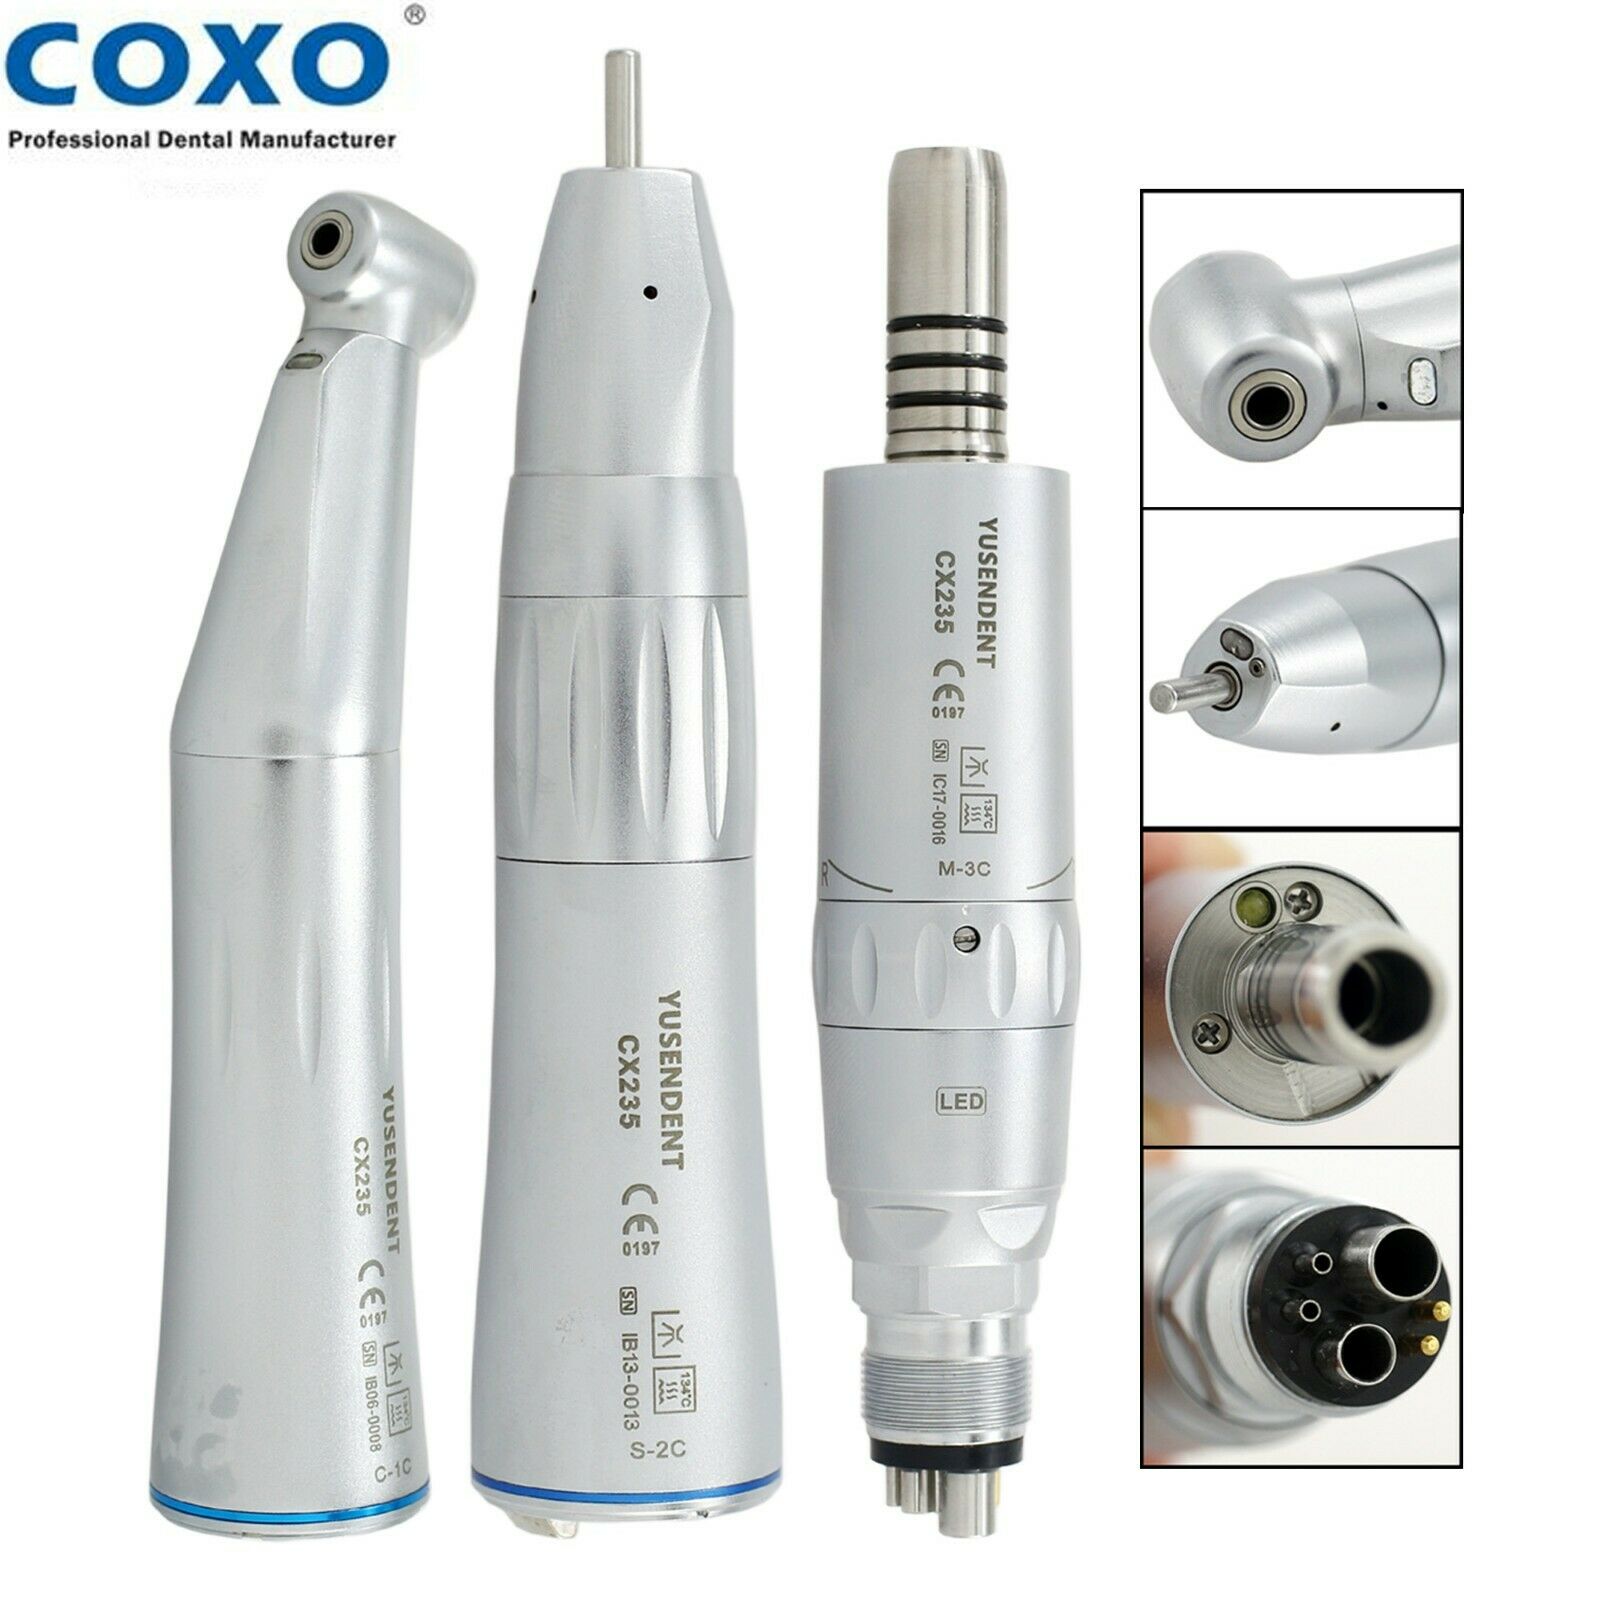 COXO®低速ハンドピースセットCX235C内部注水-LED付き